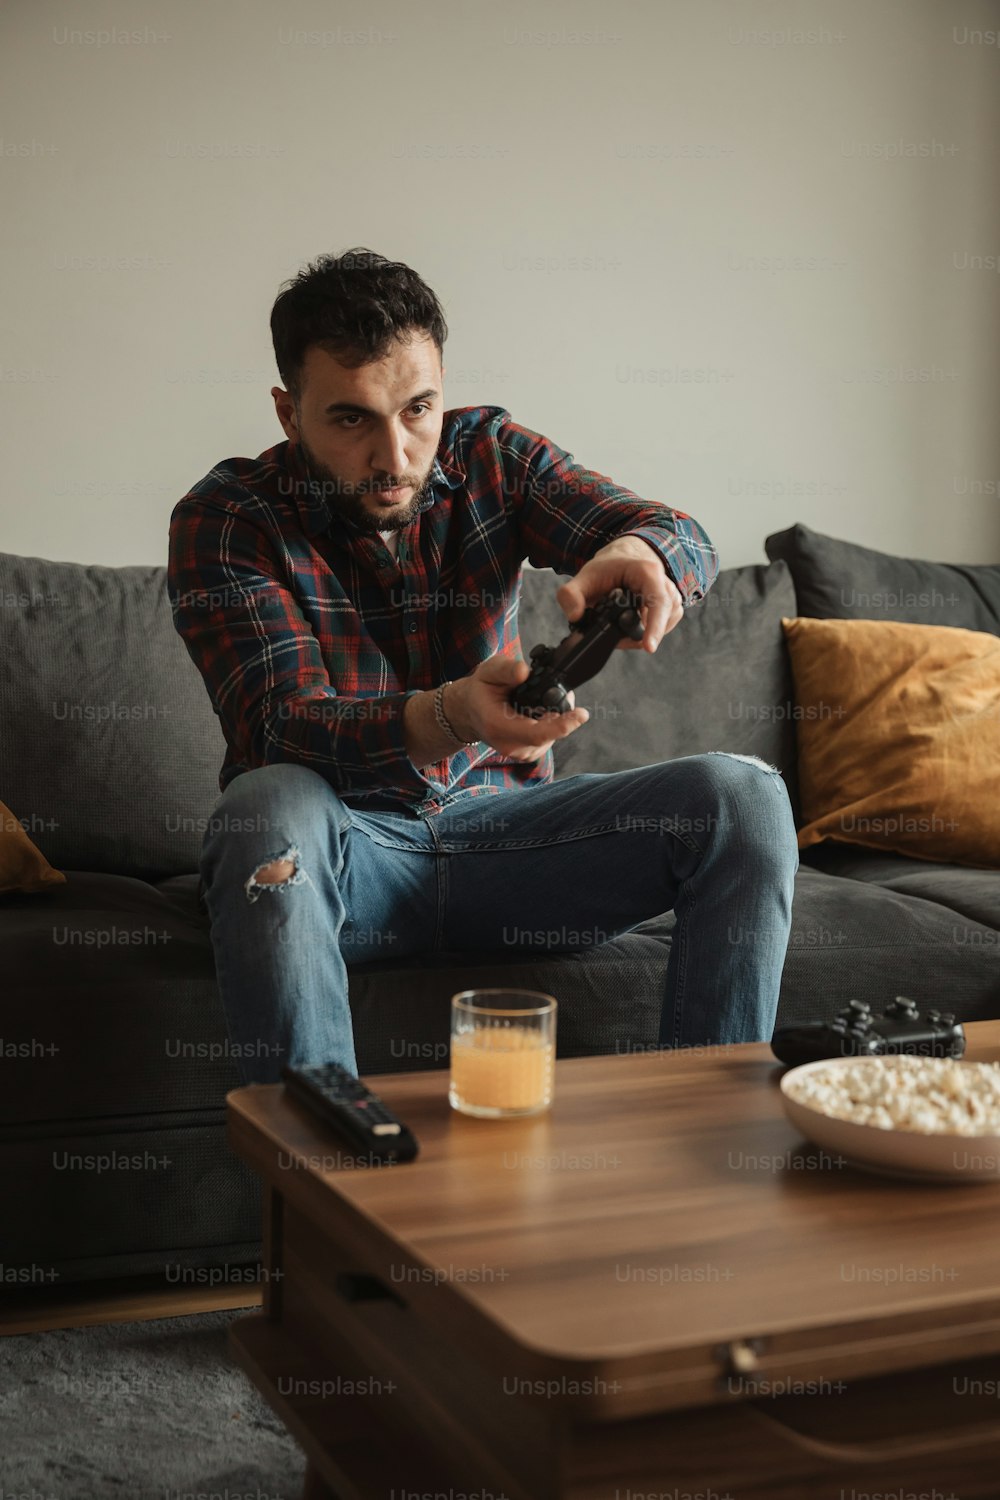 Un uomo seduto su un divano che tiene un telecomando